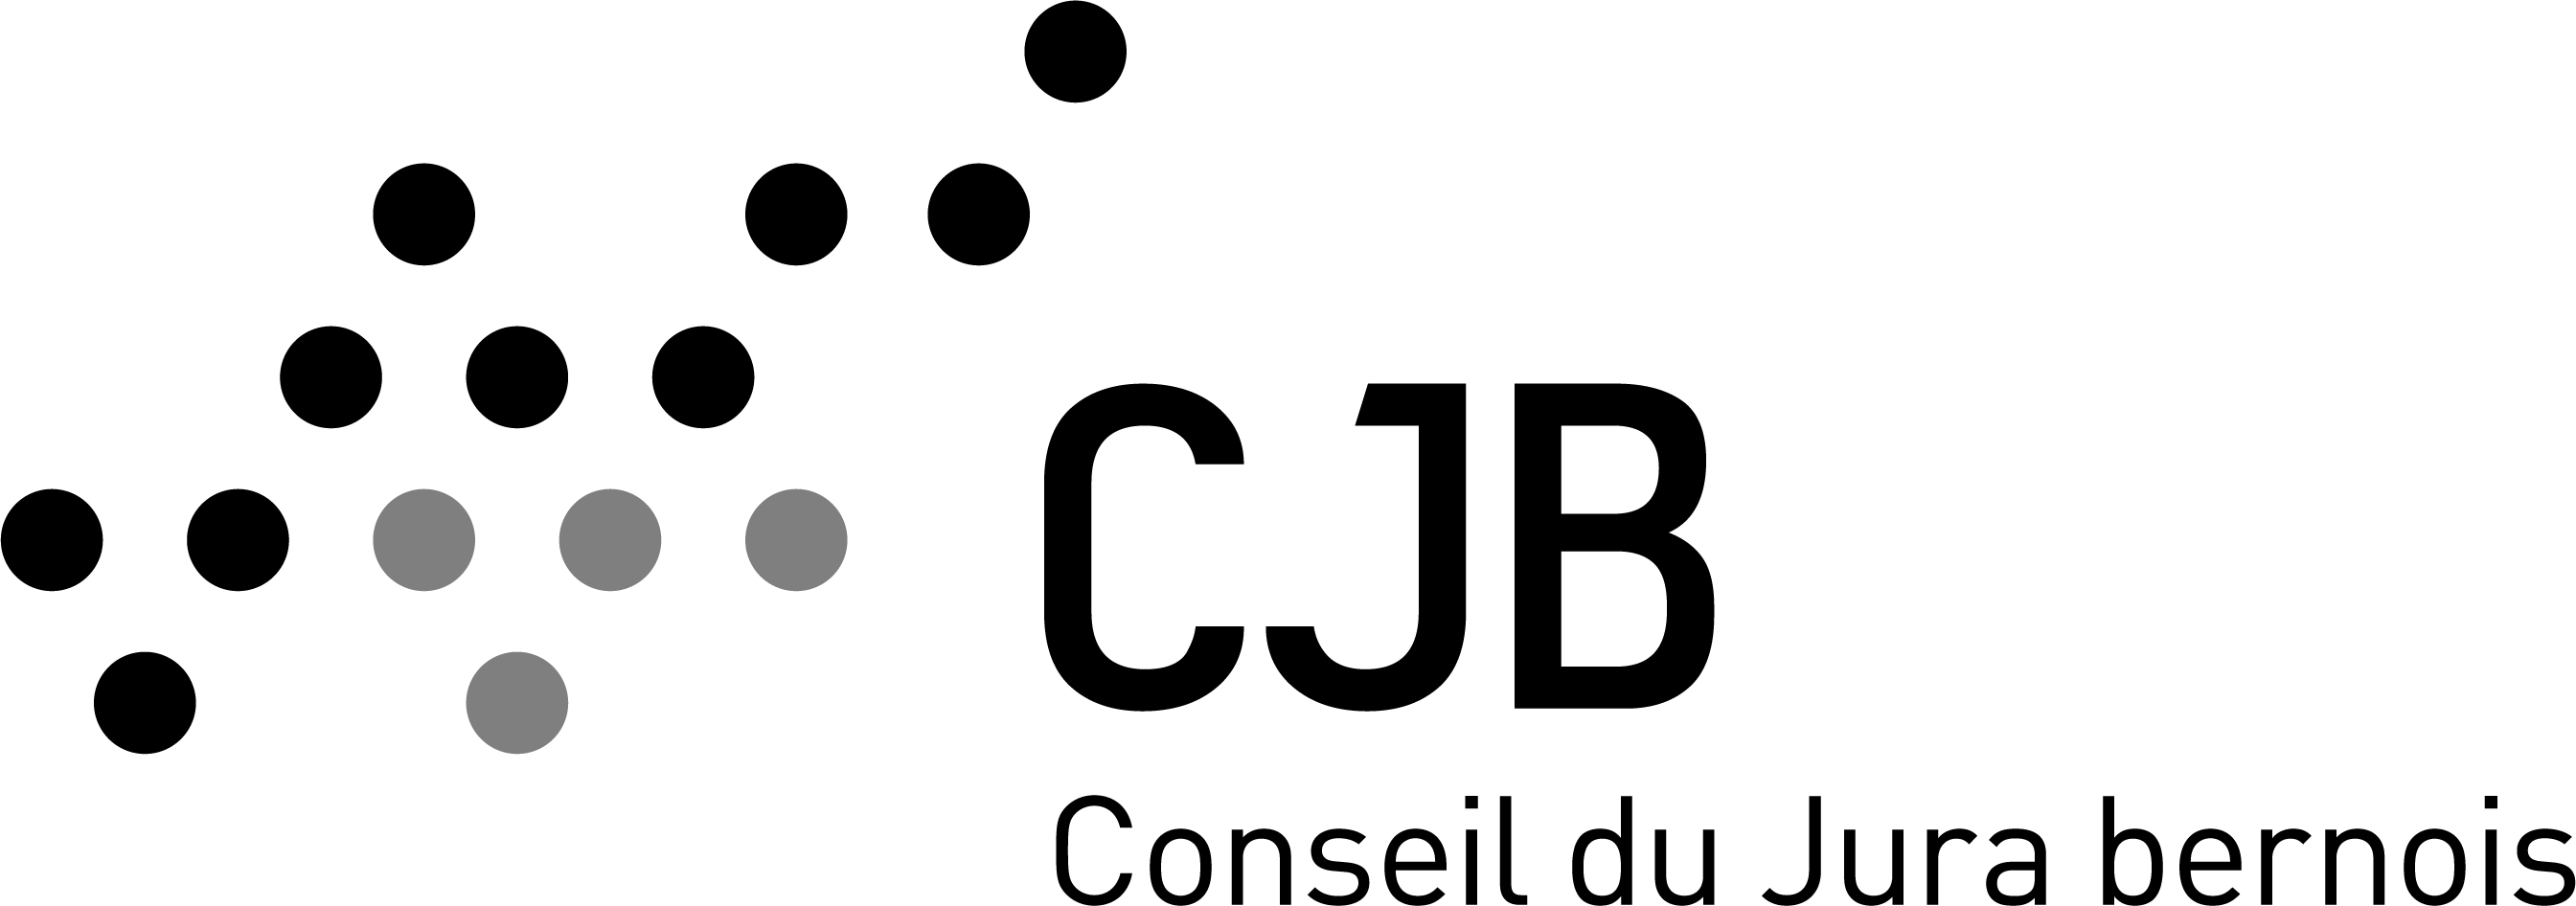 logo CJB 2018 logo NB Collections